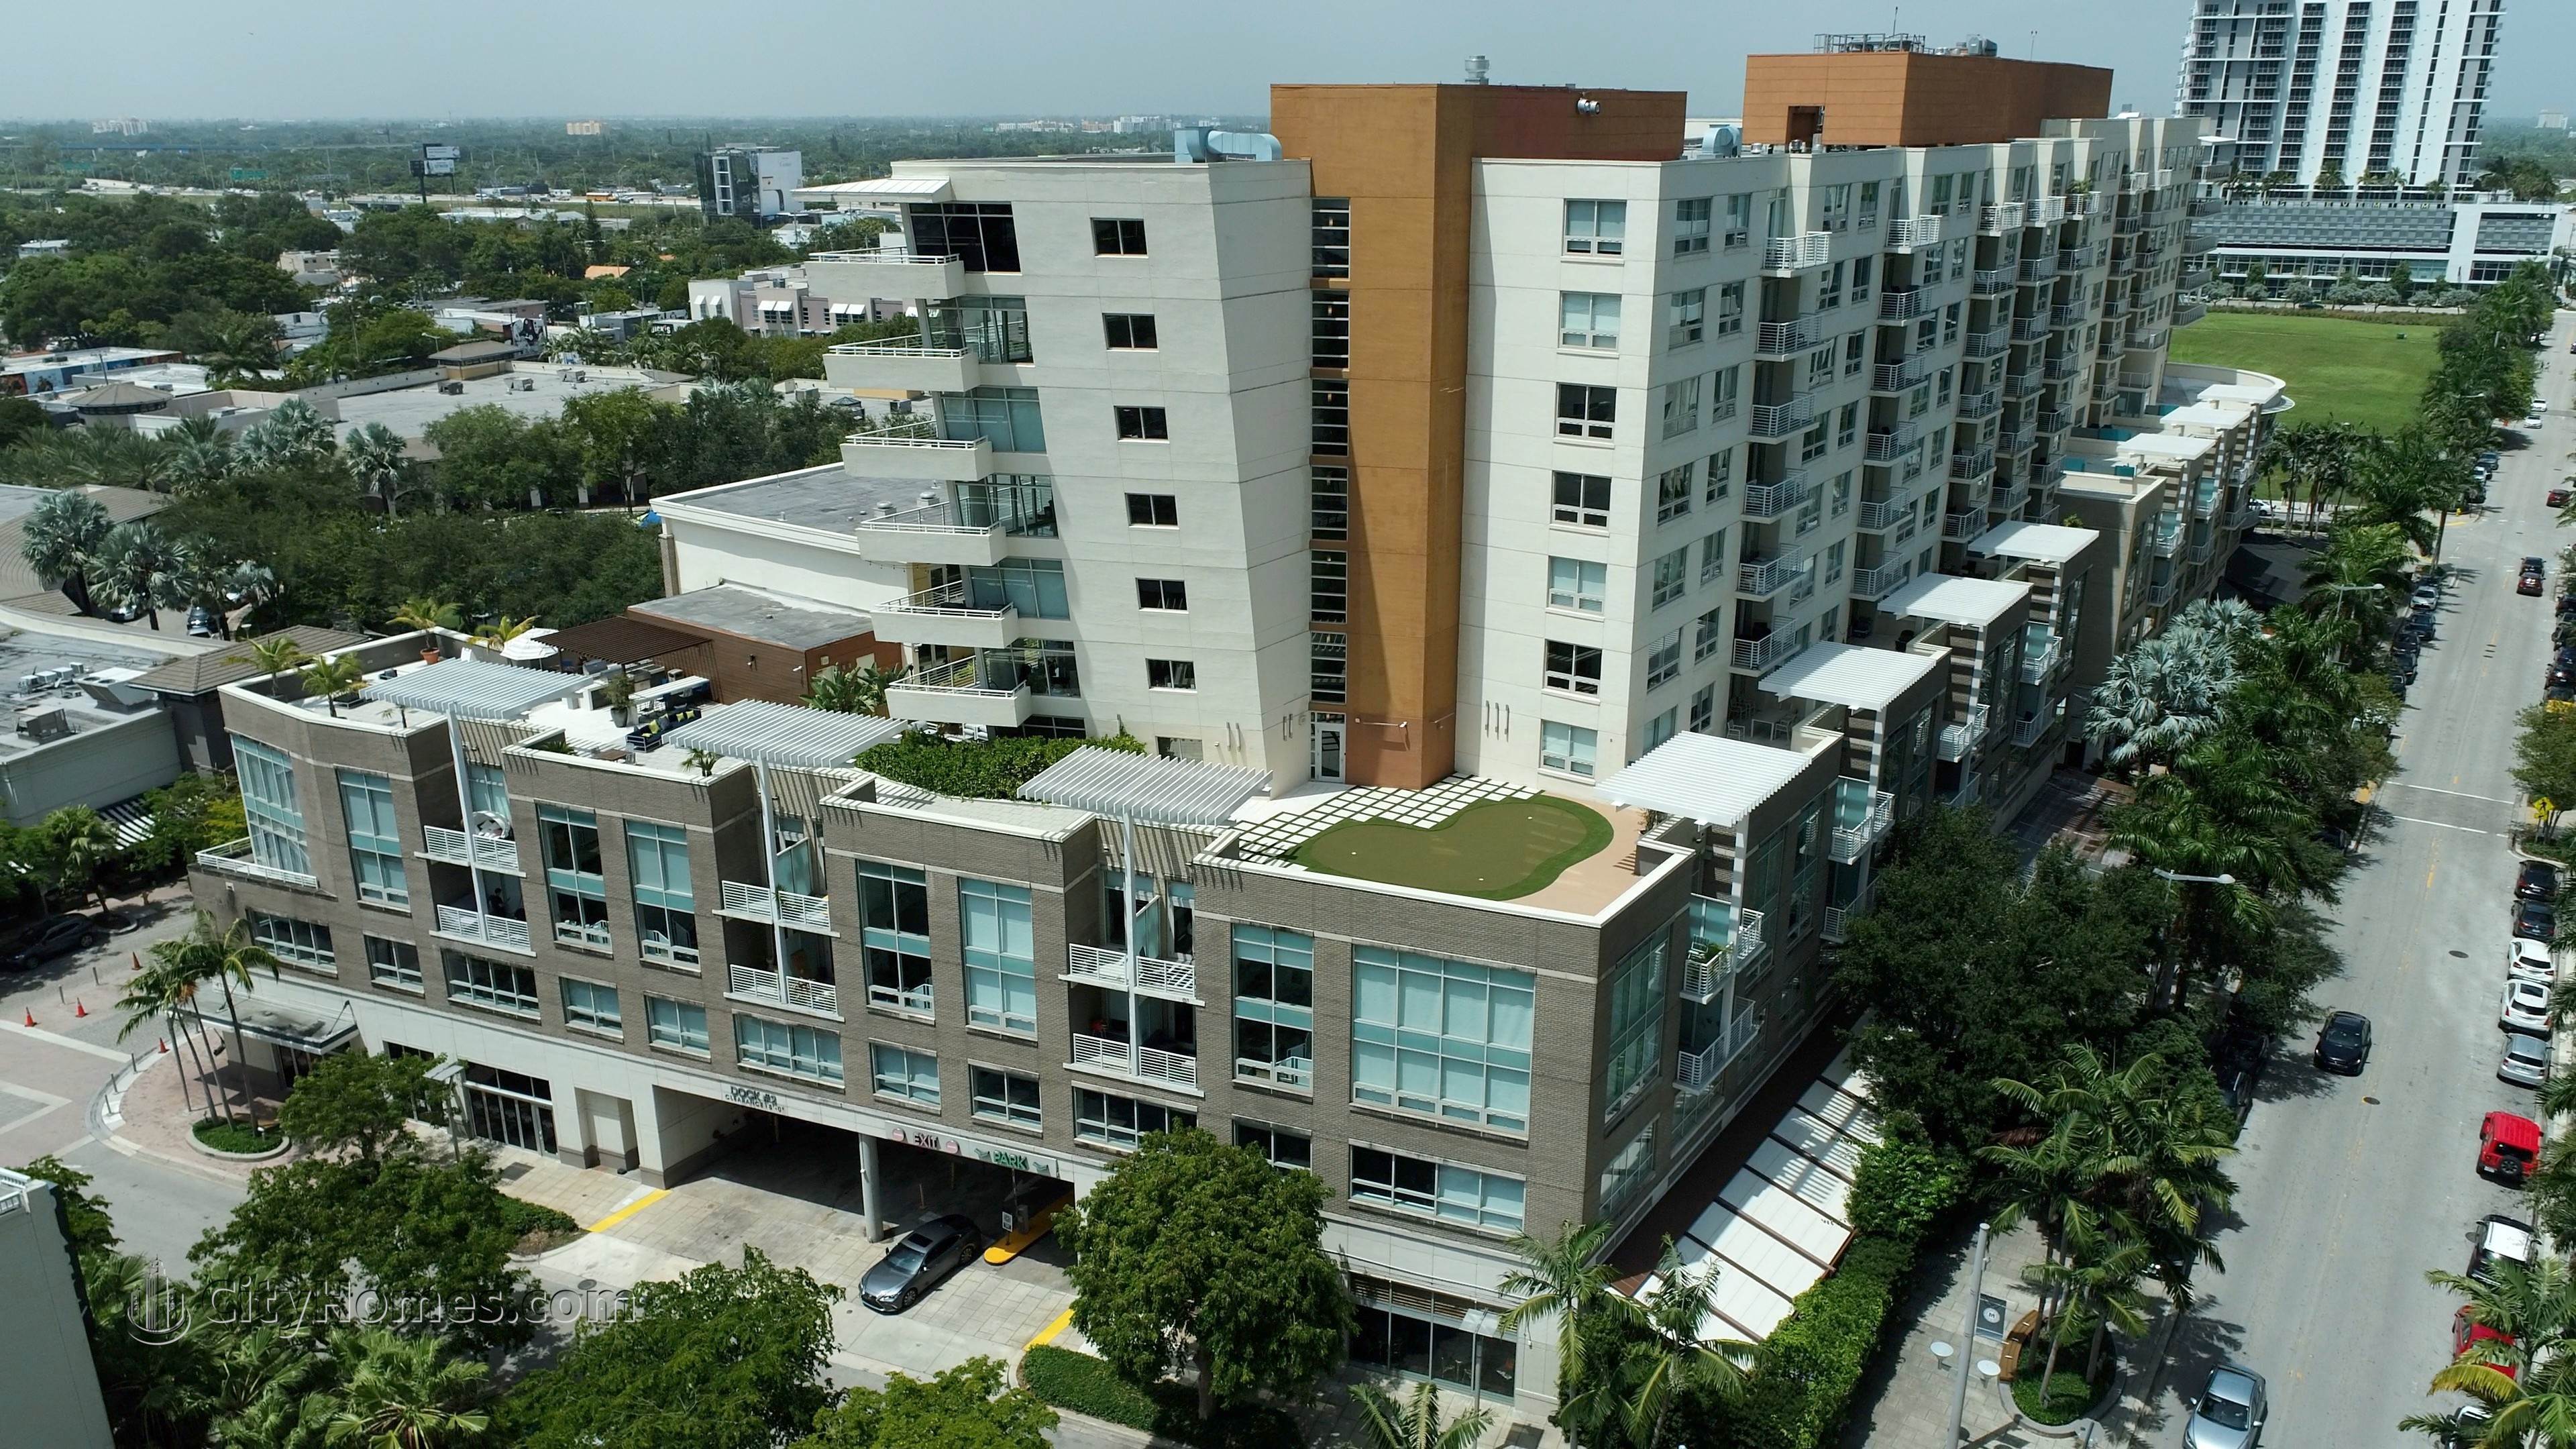 Midtown Midblock building at 3250 NE 1st Avenue, Midtown Miami, Miami, FL 33137